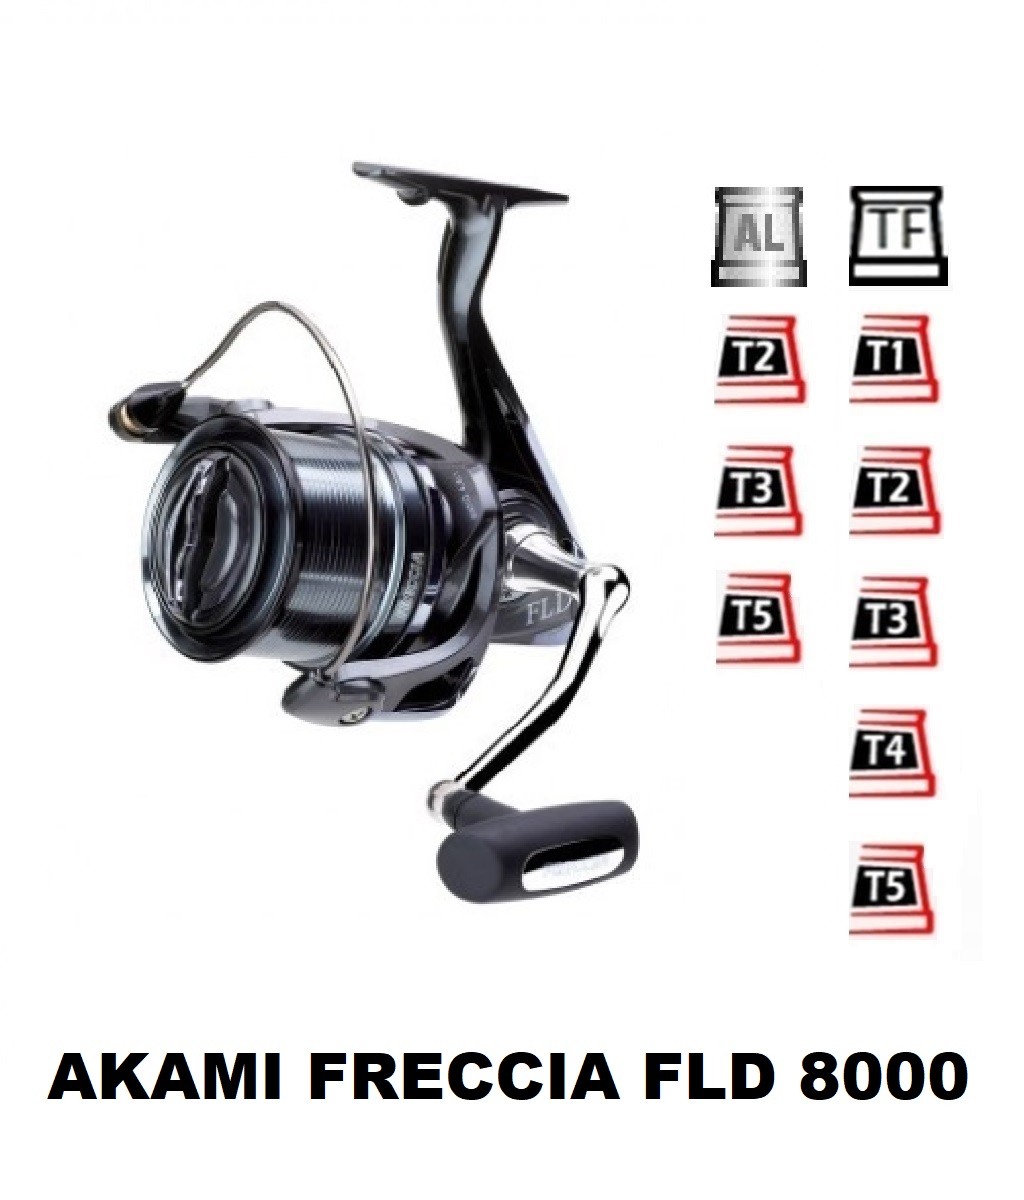 Bobines Akami Freccia FLD 8000